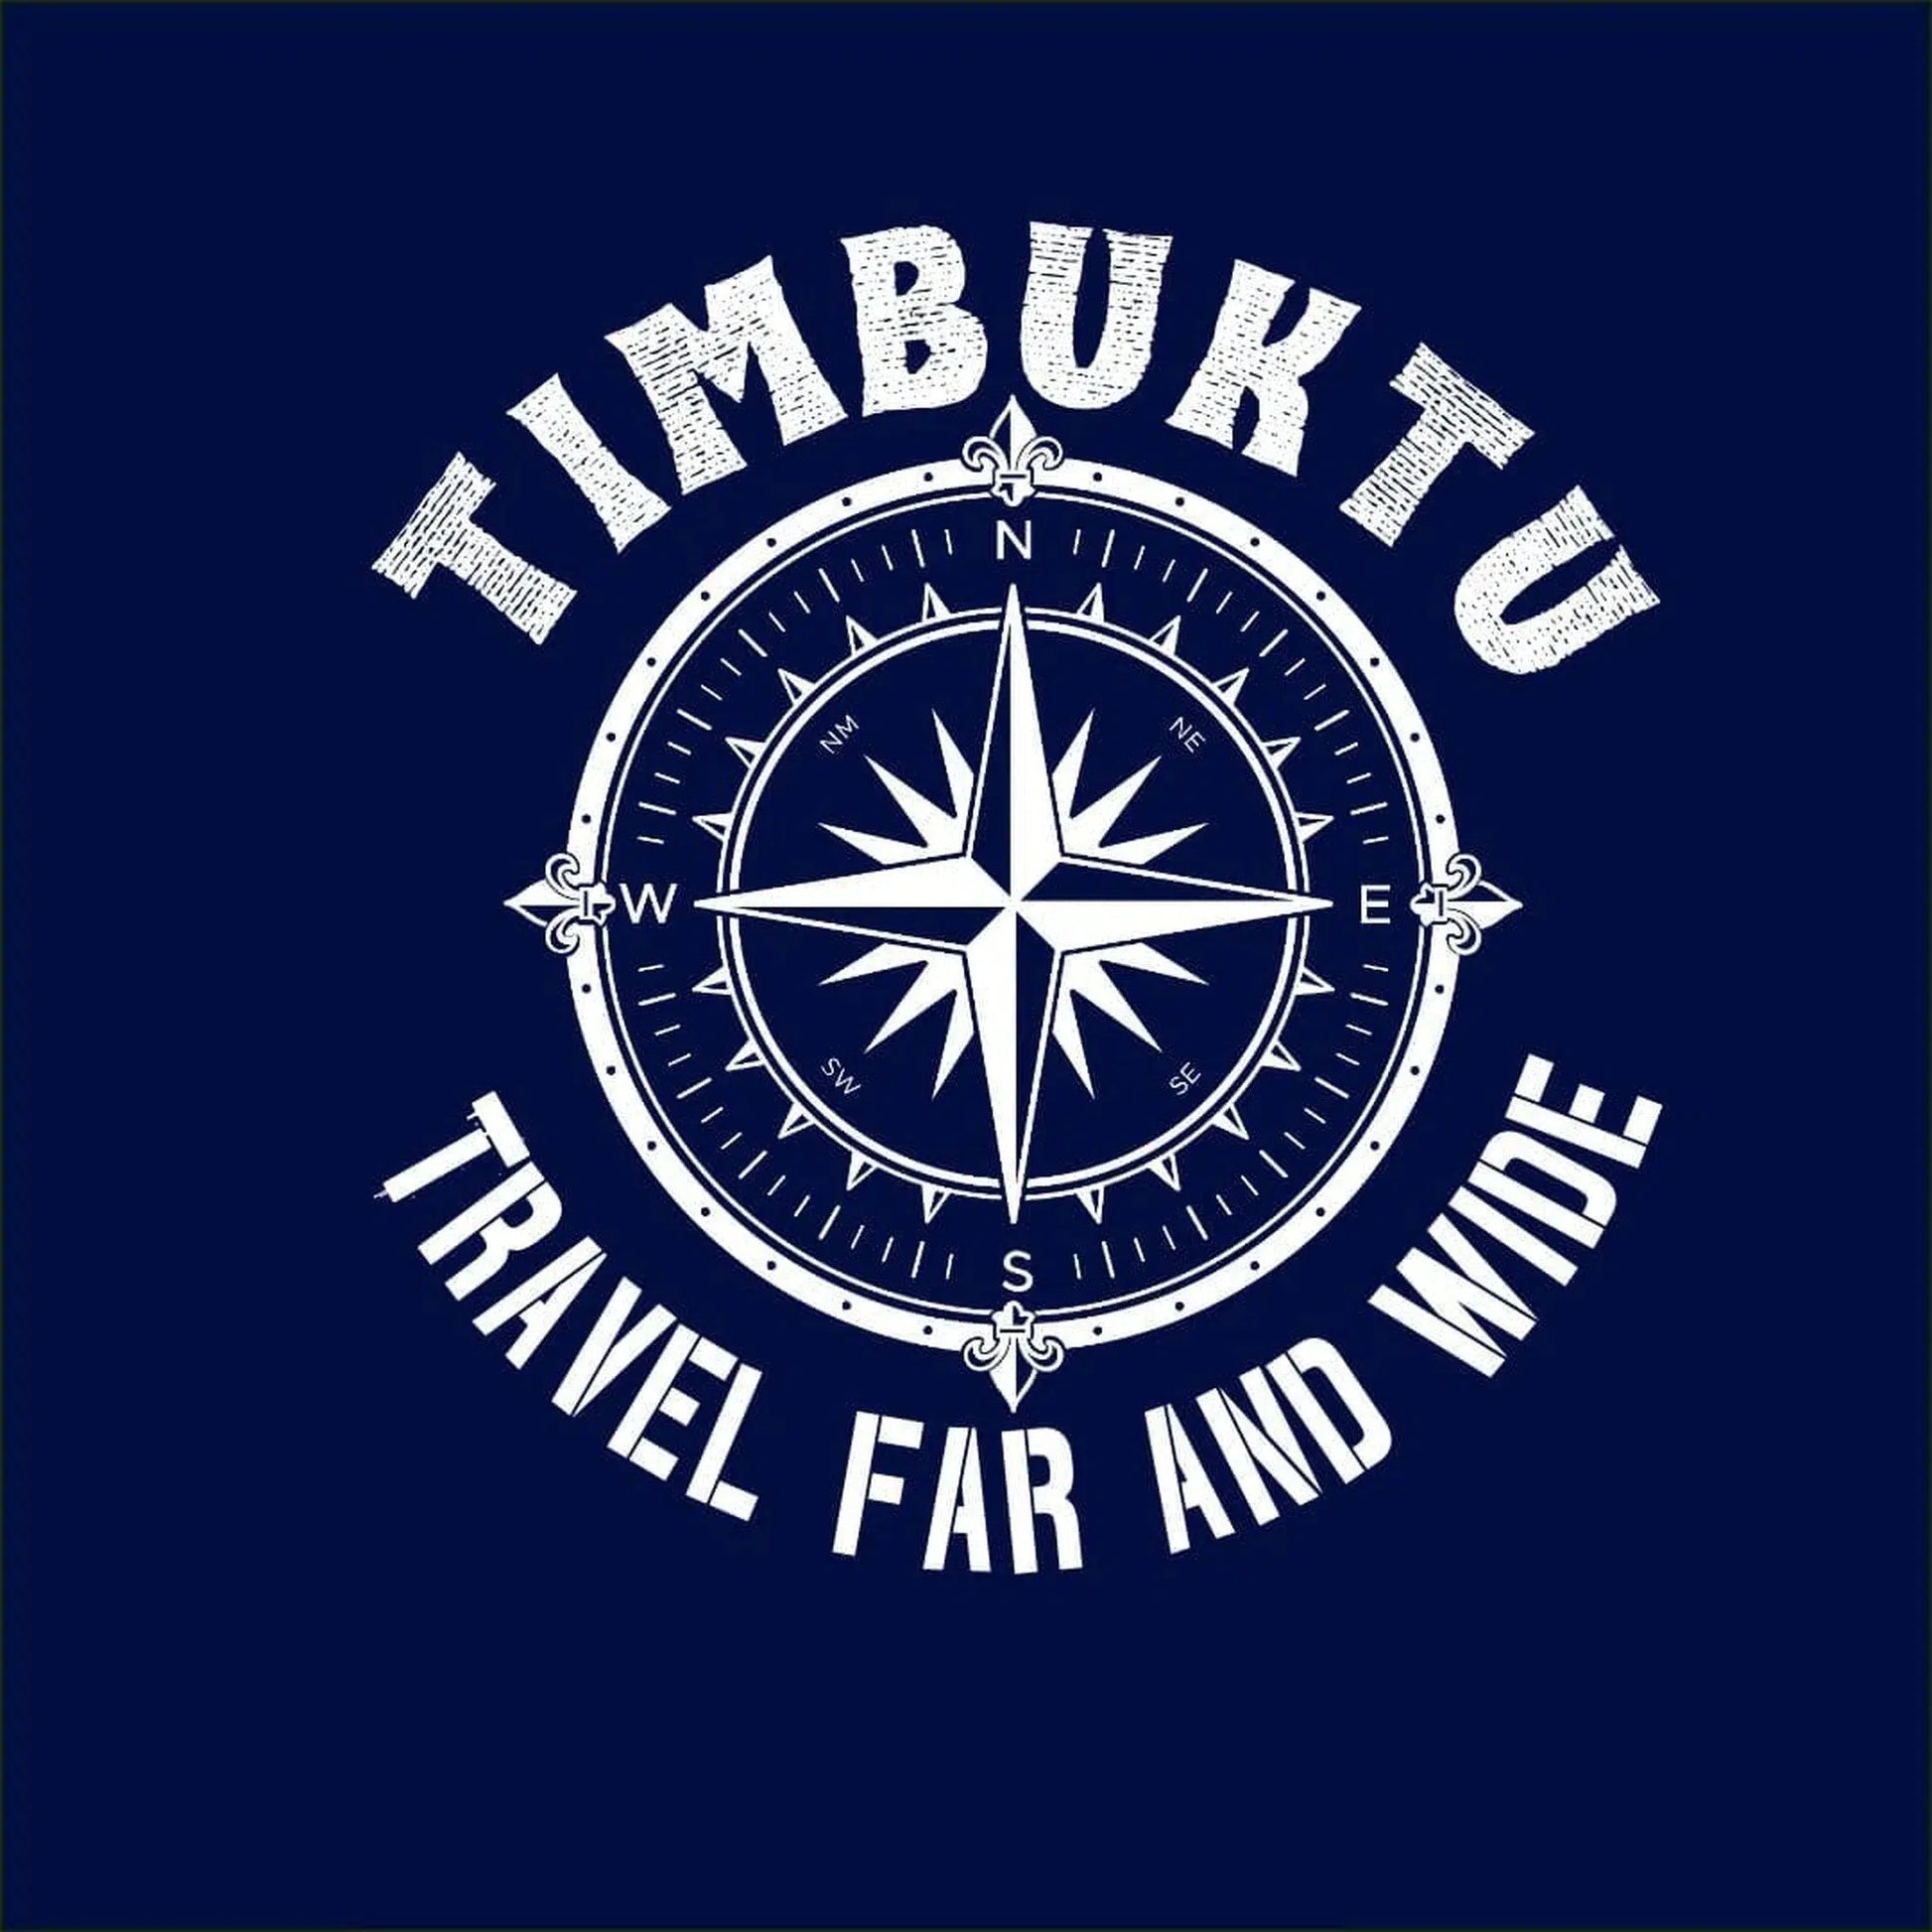 African American T shirts | Black Culture Timbuktu